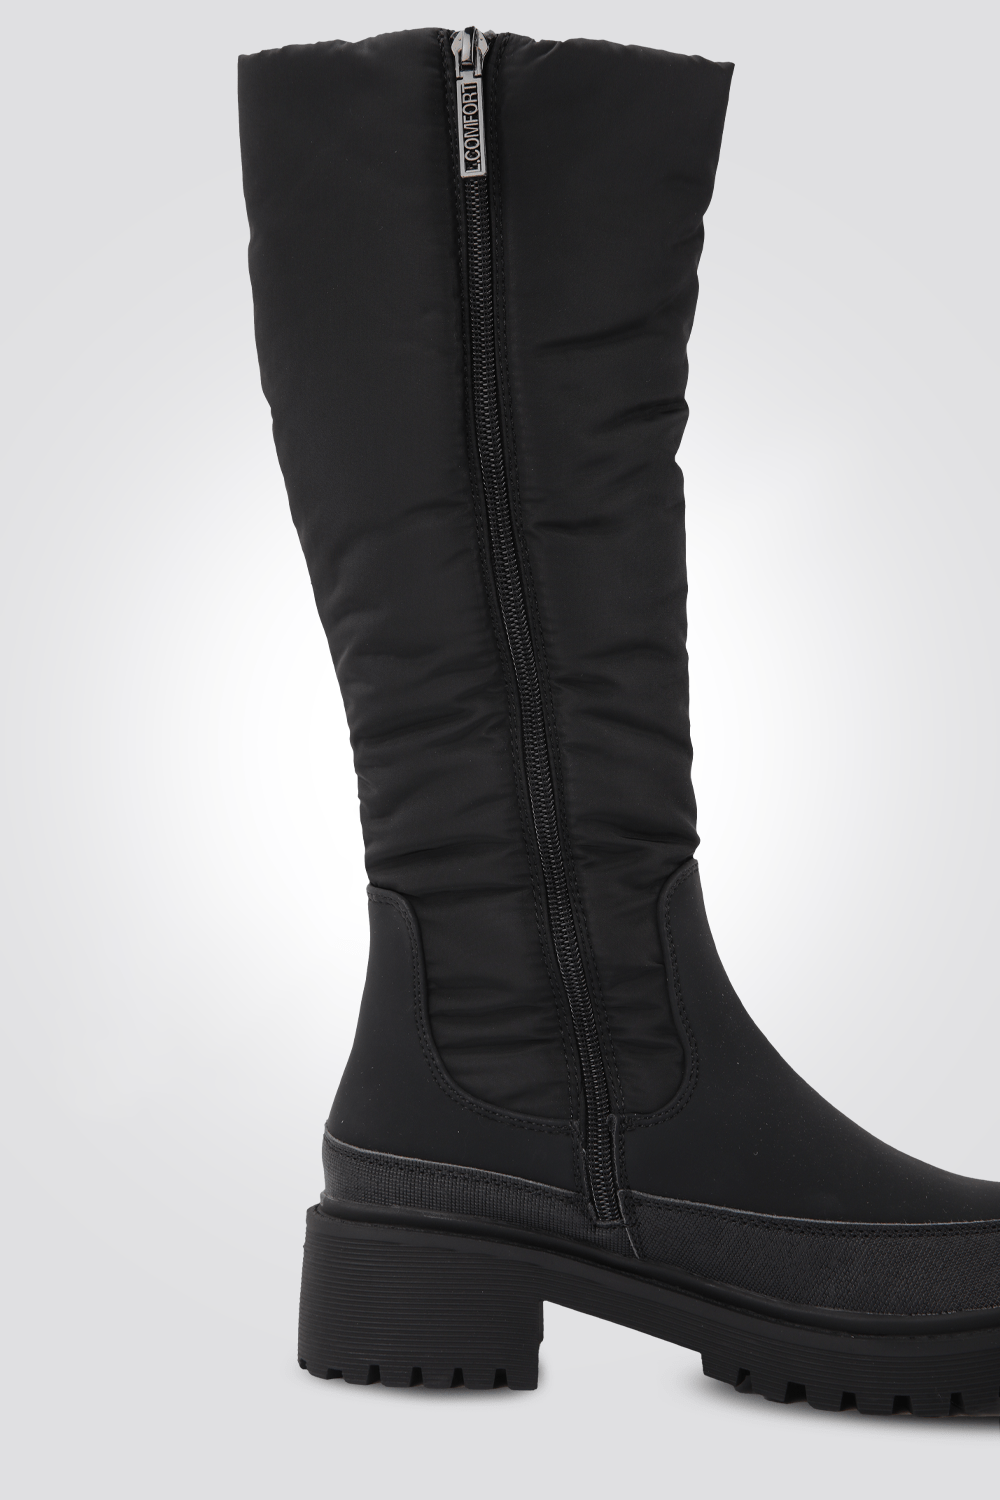 LADY COMFORT - מגפיים לנשים טרקטור בצבע שחור - MASHBIR//365